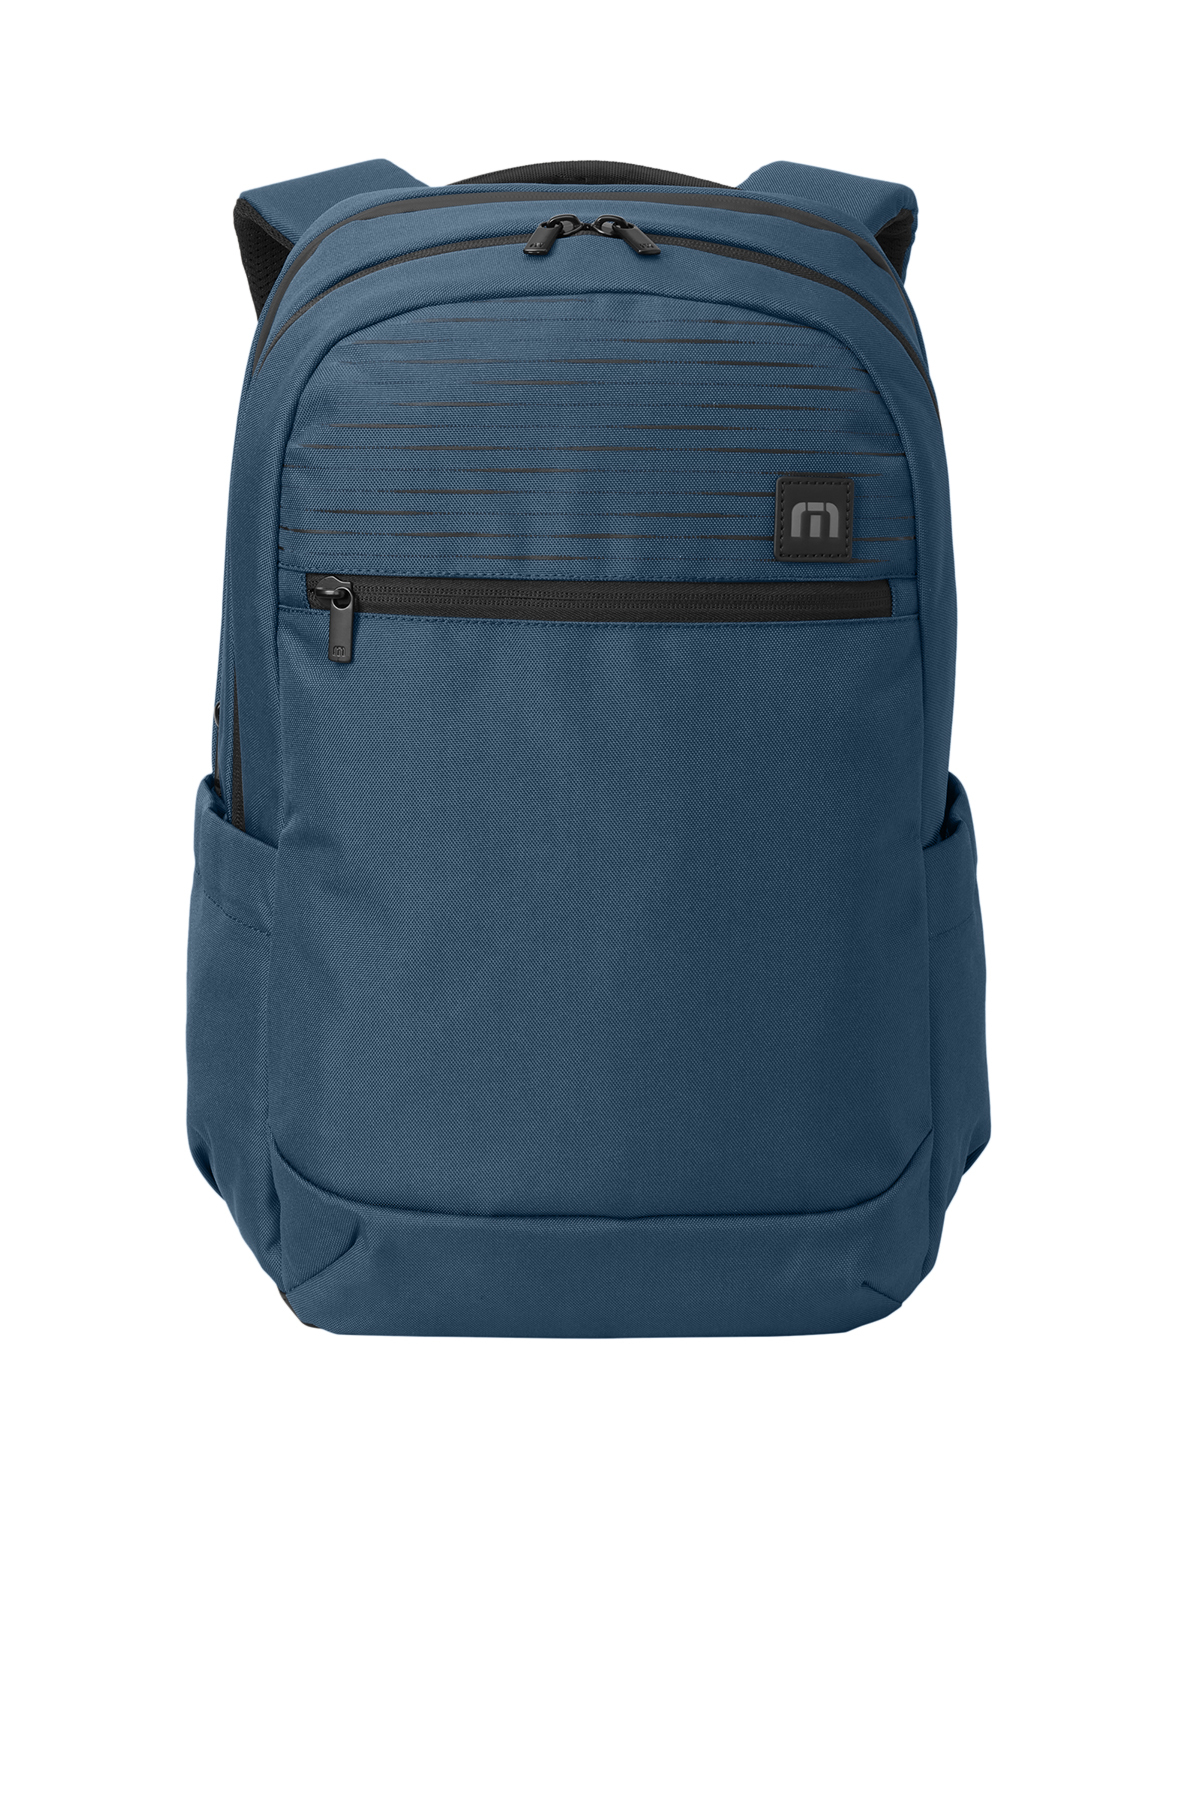 TravisMathew Approach Backpack | Product | SanMar